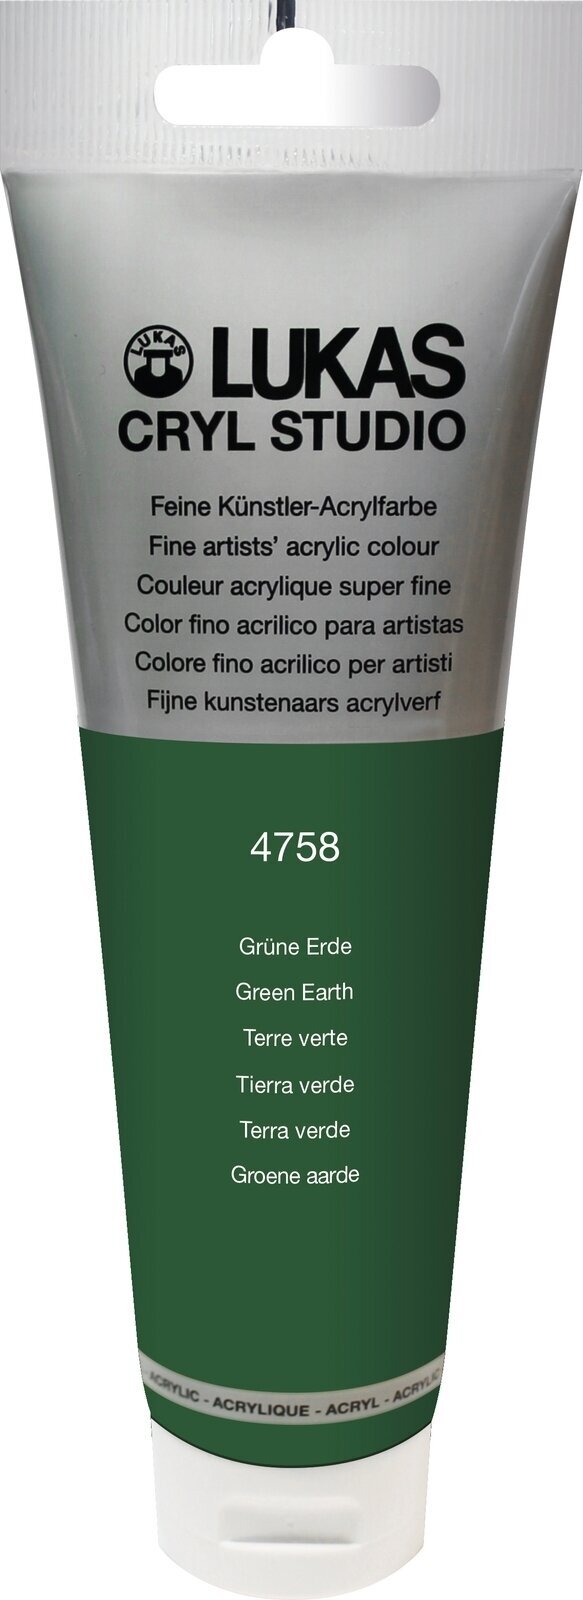 Tinta acrílica Lukas Cryl Studio Tinta acrílica 125 ml Green Earth